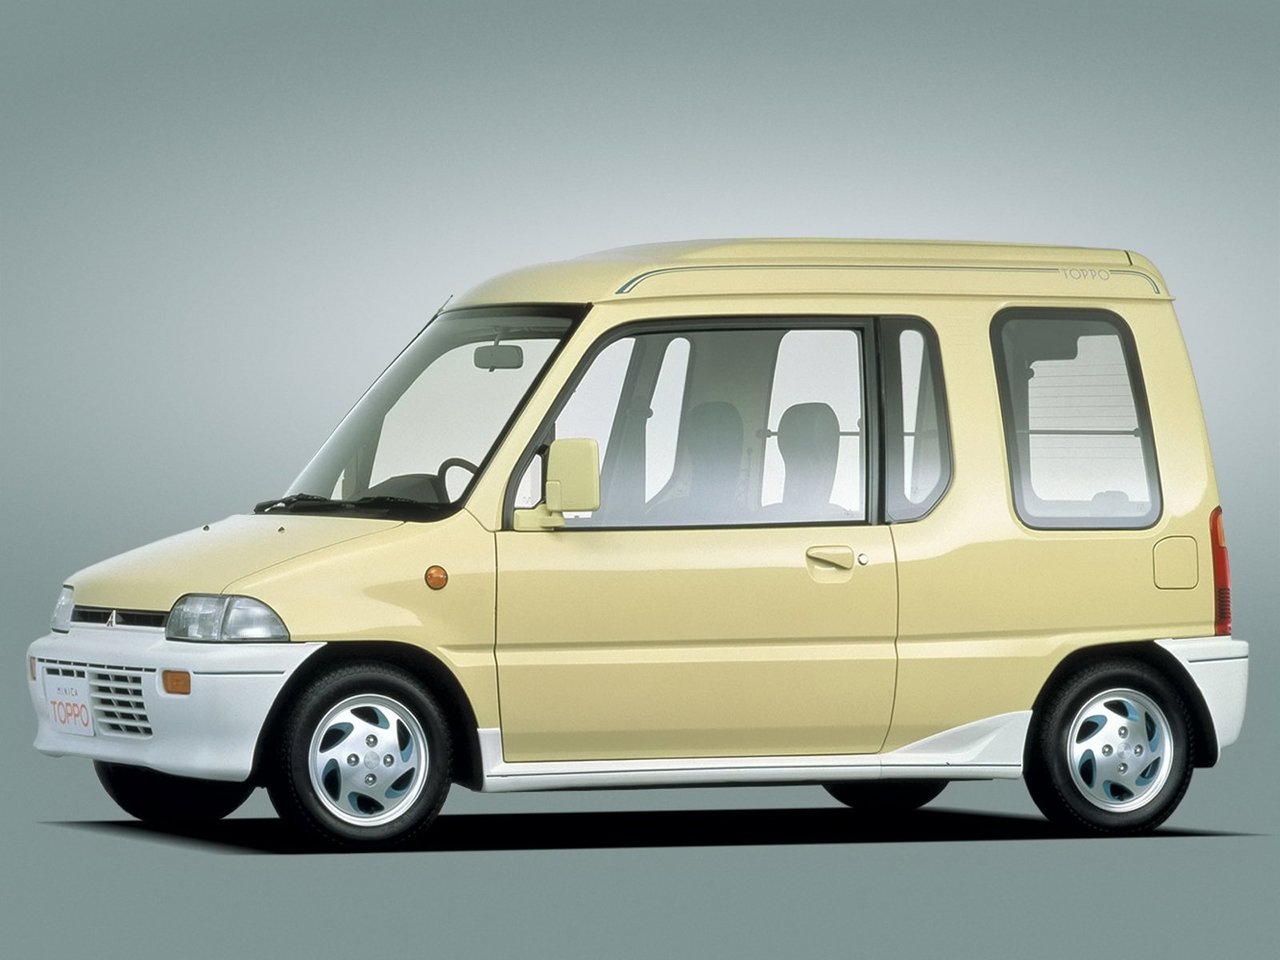 Снижаем расход Mitsubishi Toppo на топливо, устанавливаем ГБО